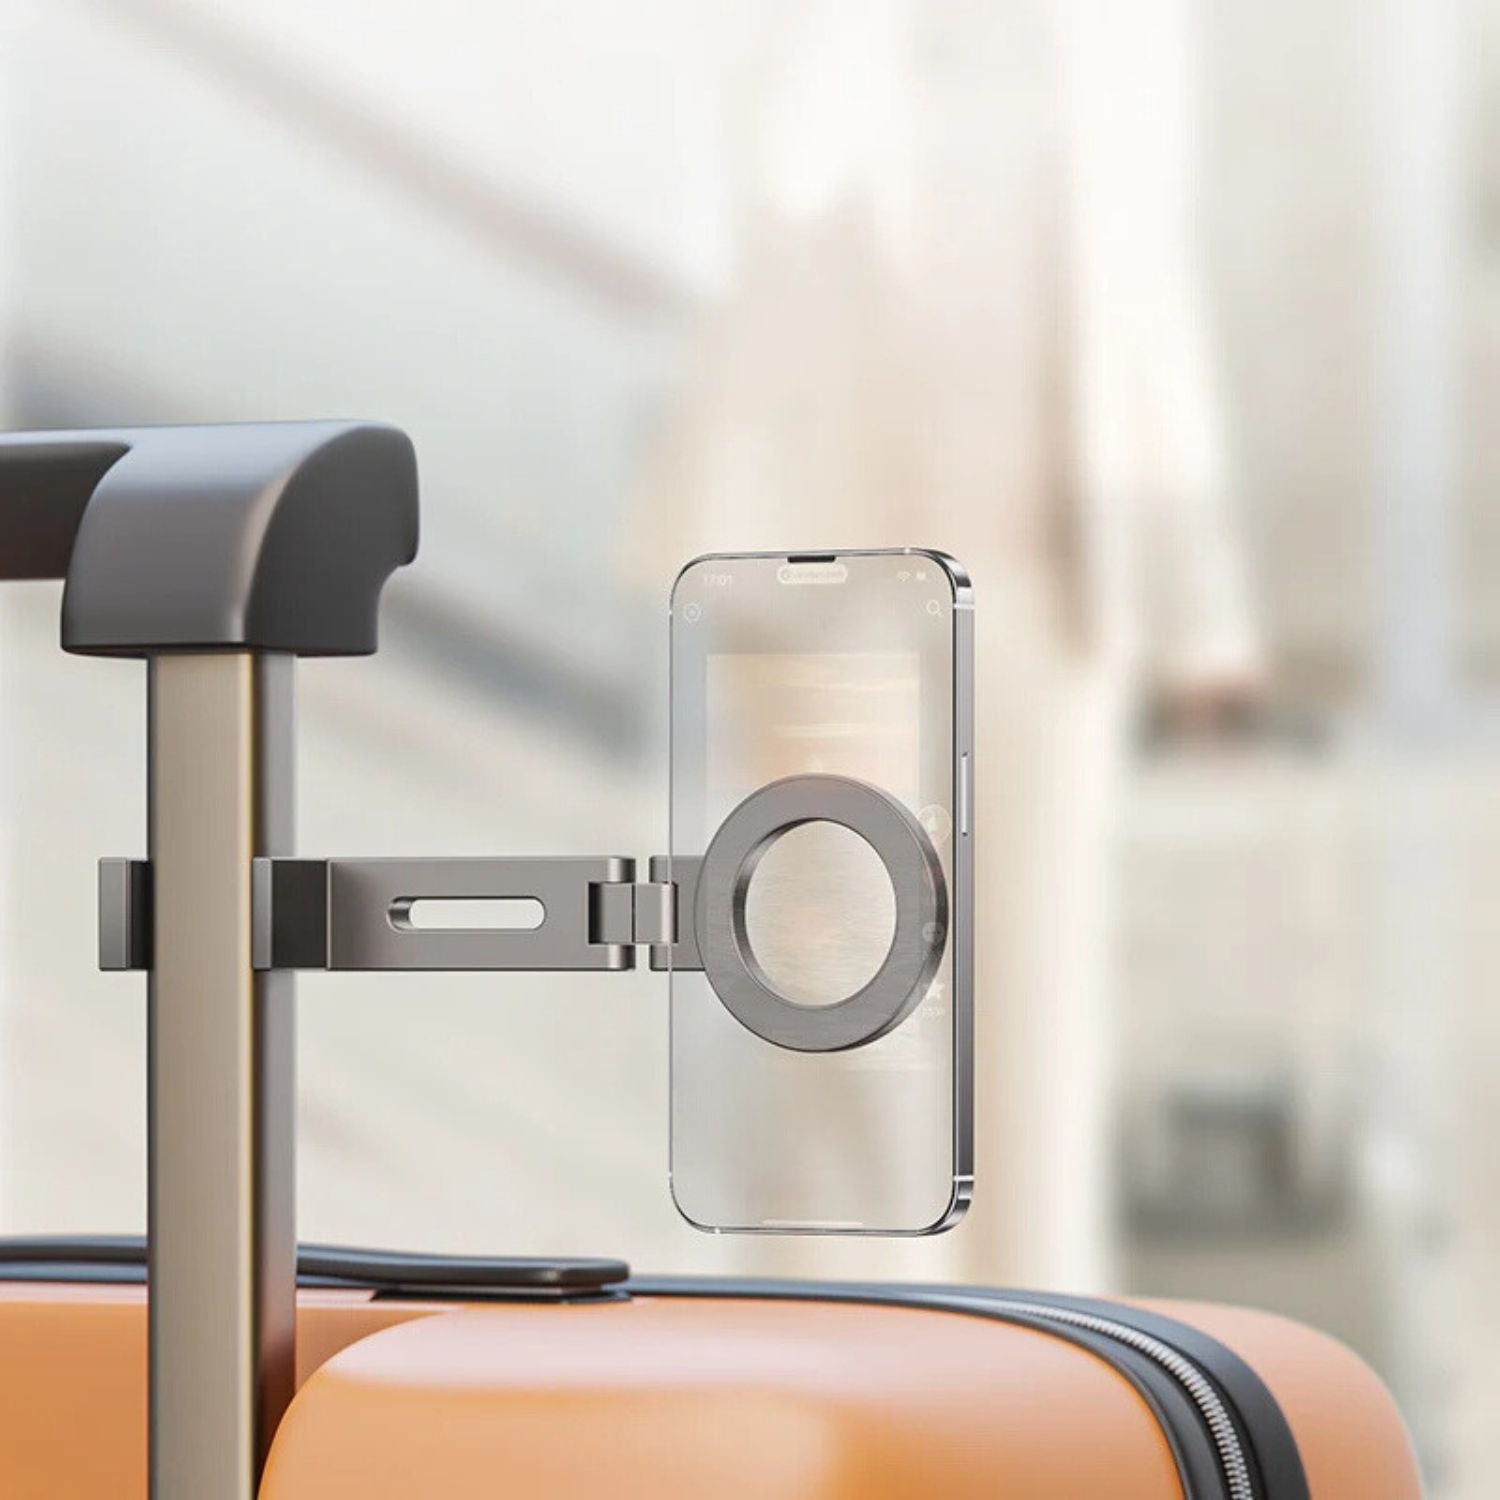 Portable Magnetic Phone Holder